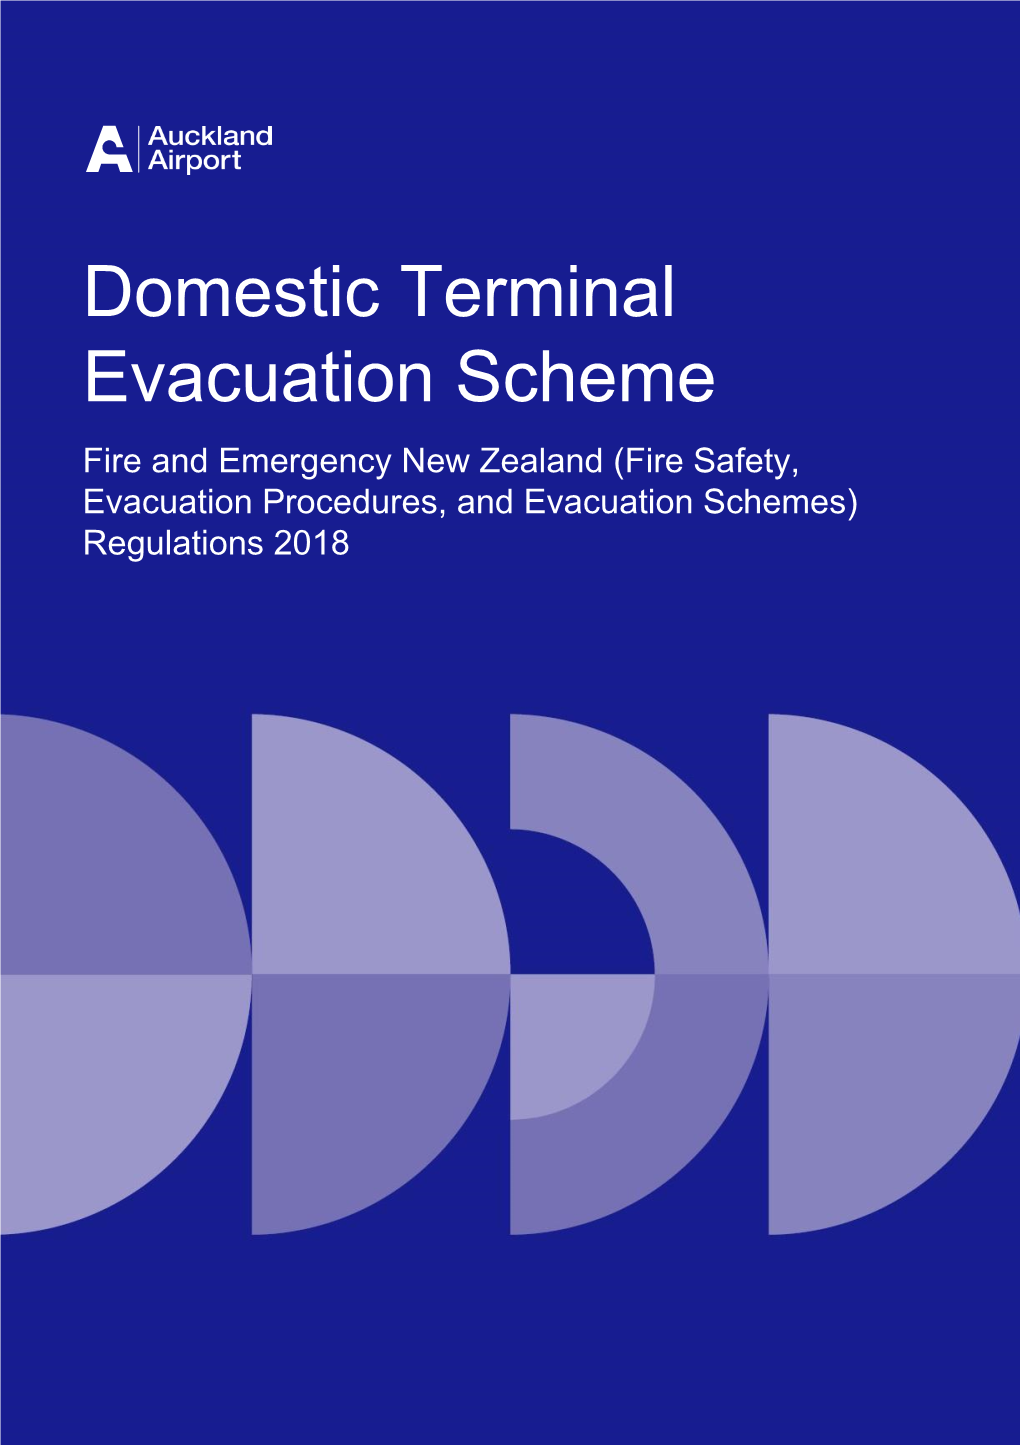 DTB Evacuation Scheme